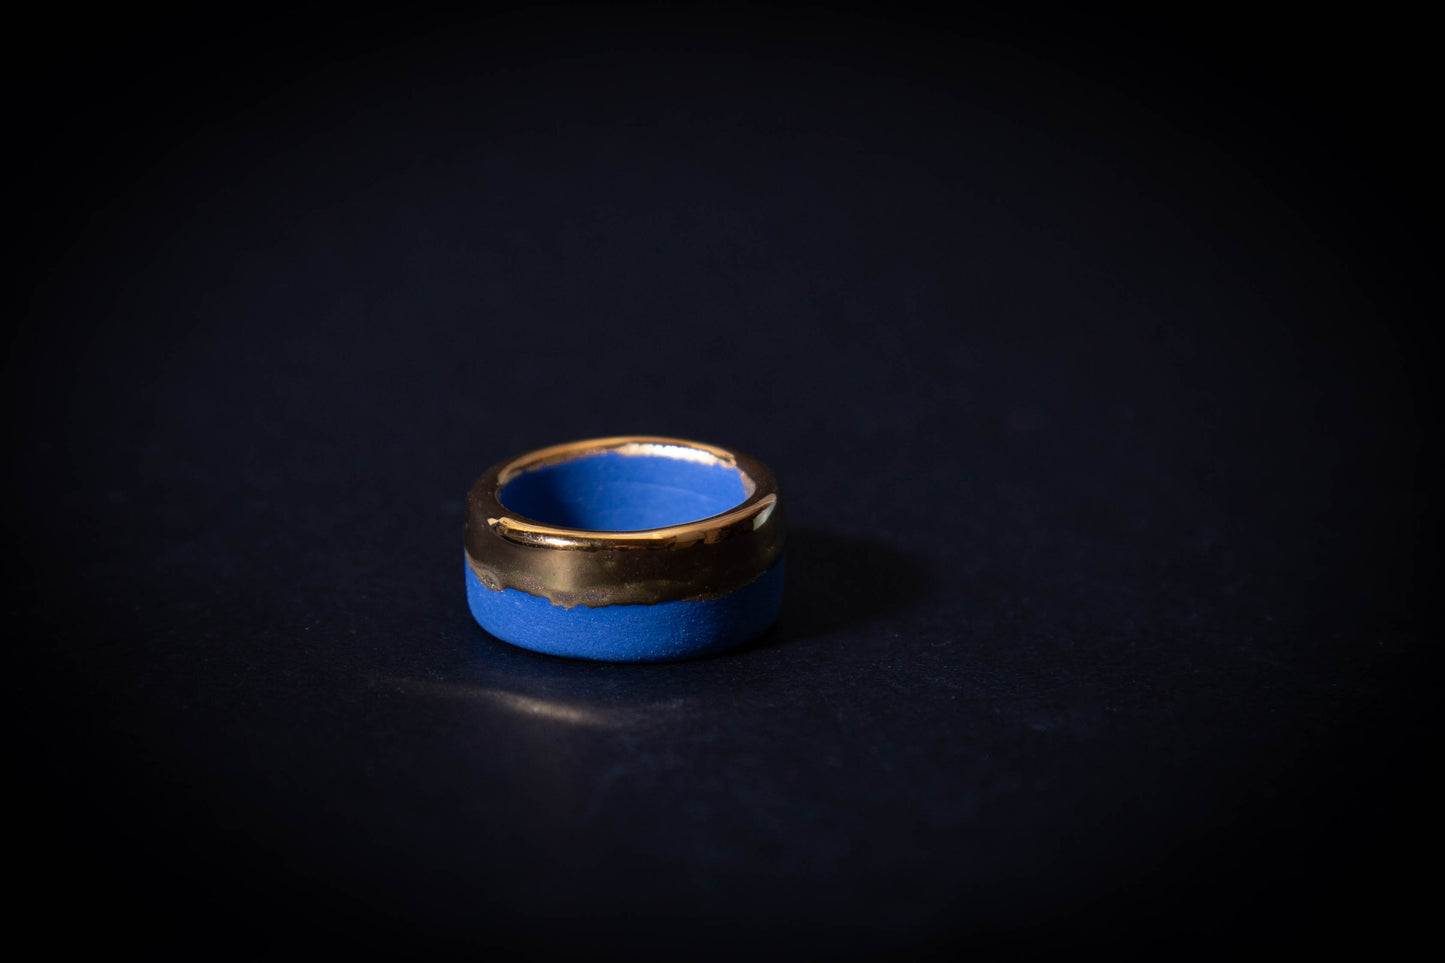 Mėlyno porceliano žiedas su aukso liustru